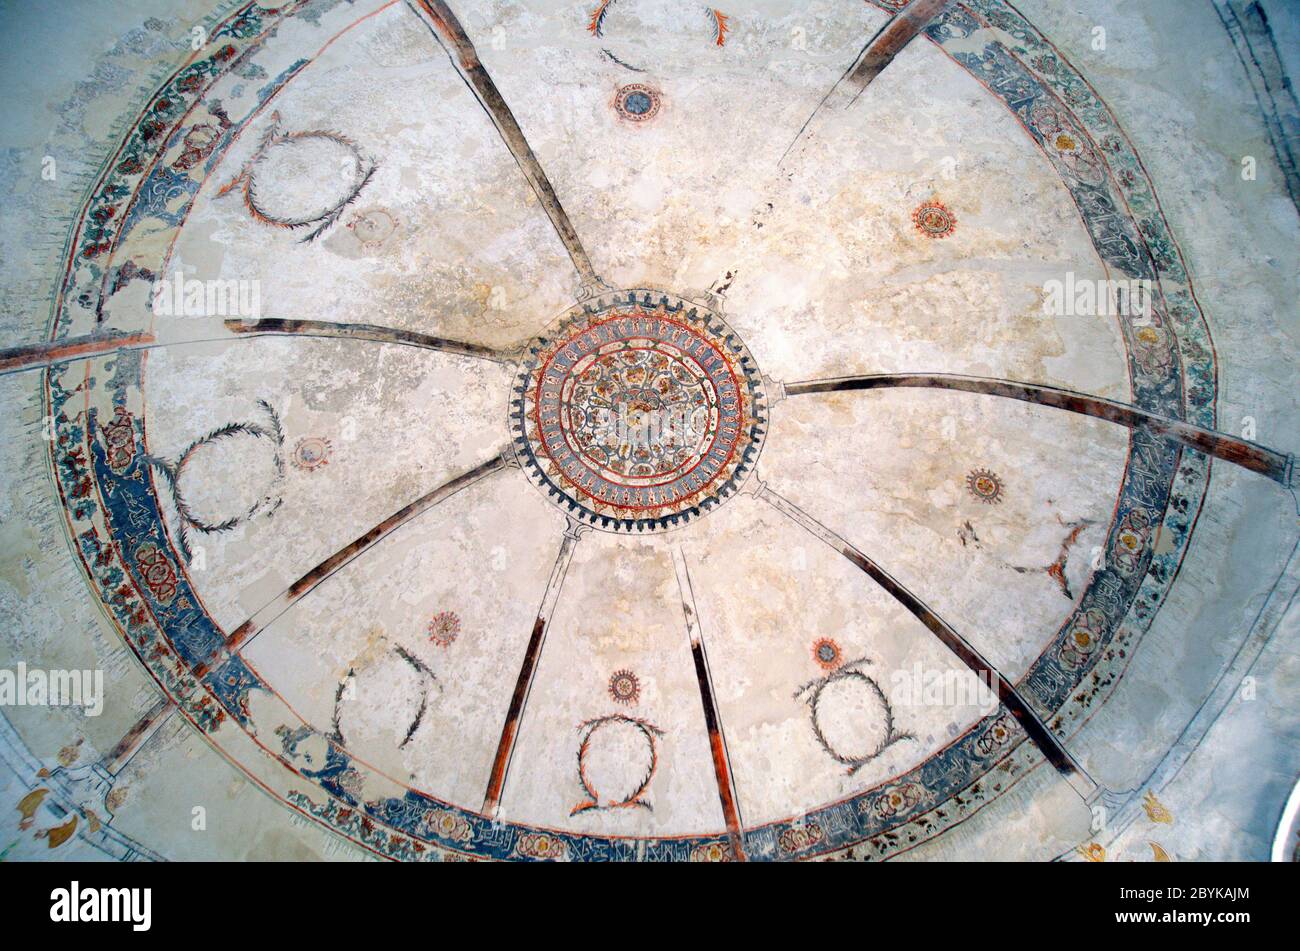 Greece, Ioannina, inside cupola of medieval Fetiche Mosque Stock Photo